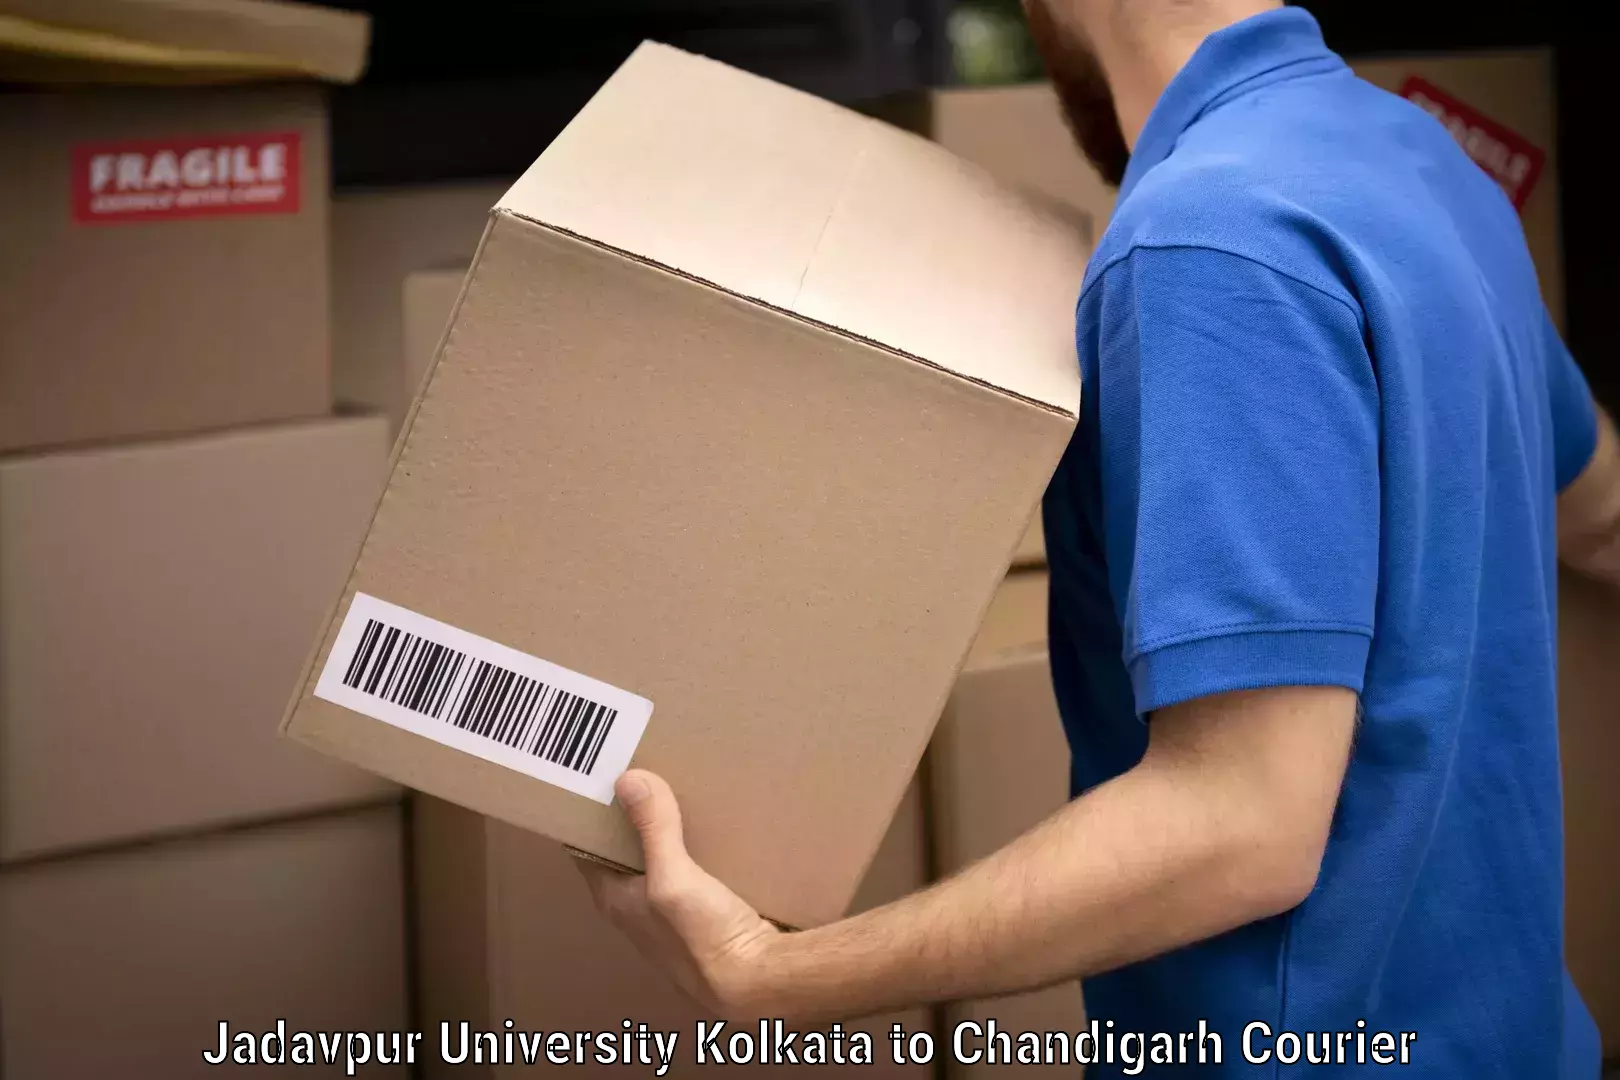 Furniture moving experts Jadavpur University Kolkata to Chandigarh